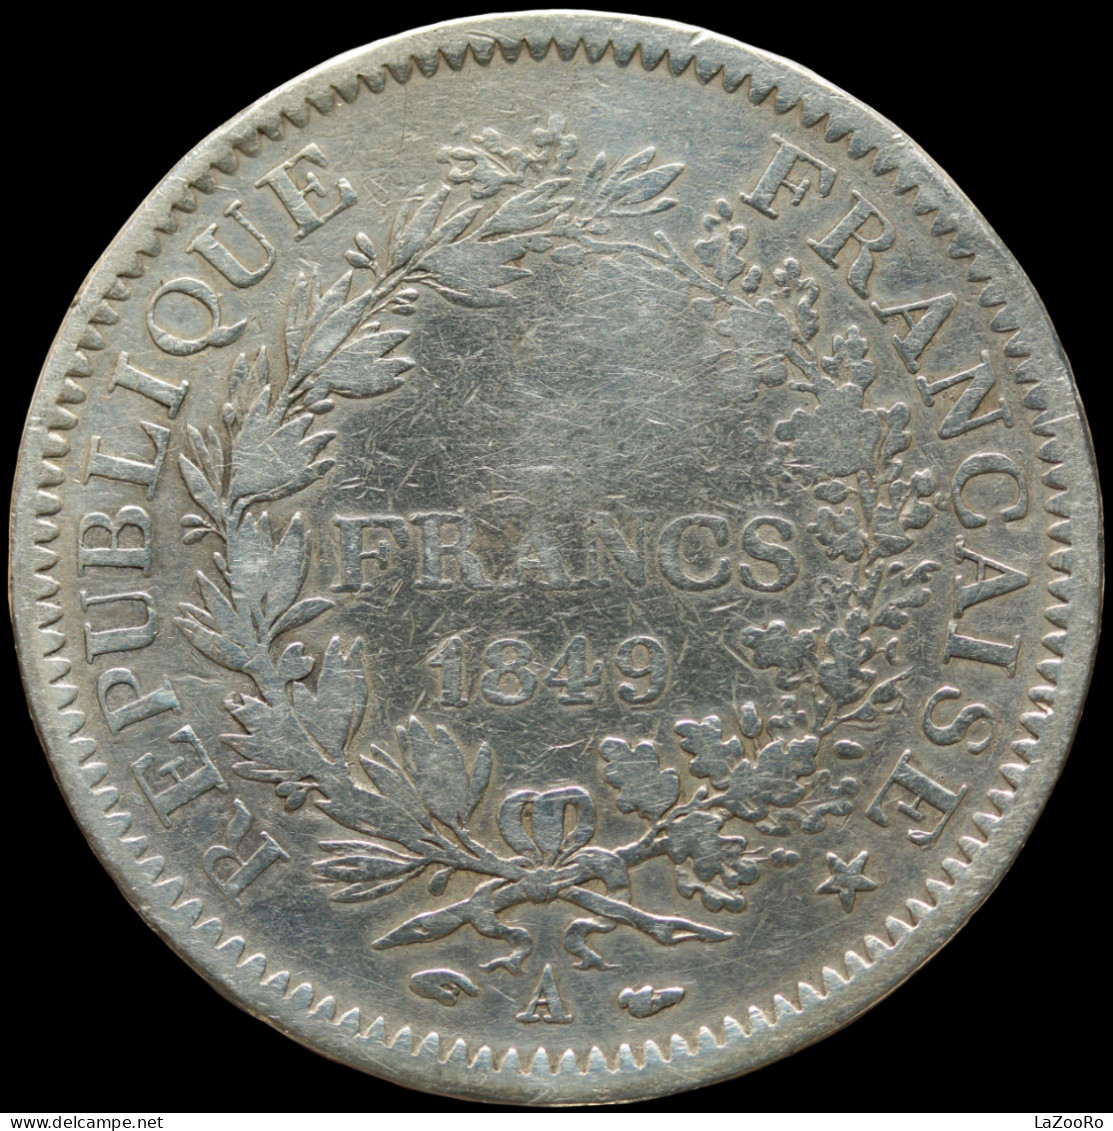 LaZooRo: France 5 Francs 1849 A F / VF - Silver - 5 Francs